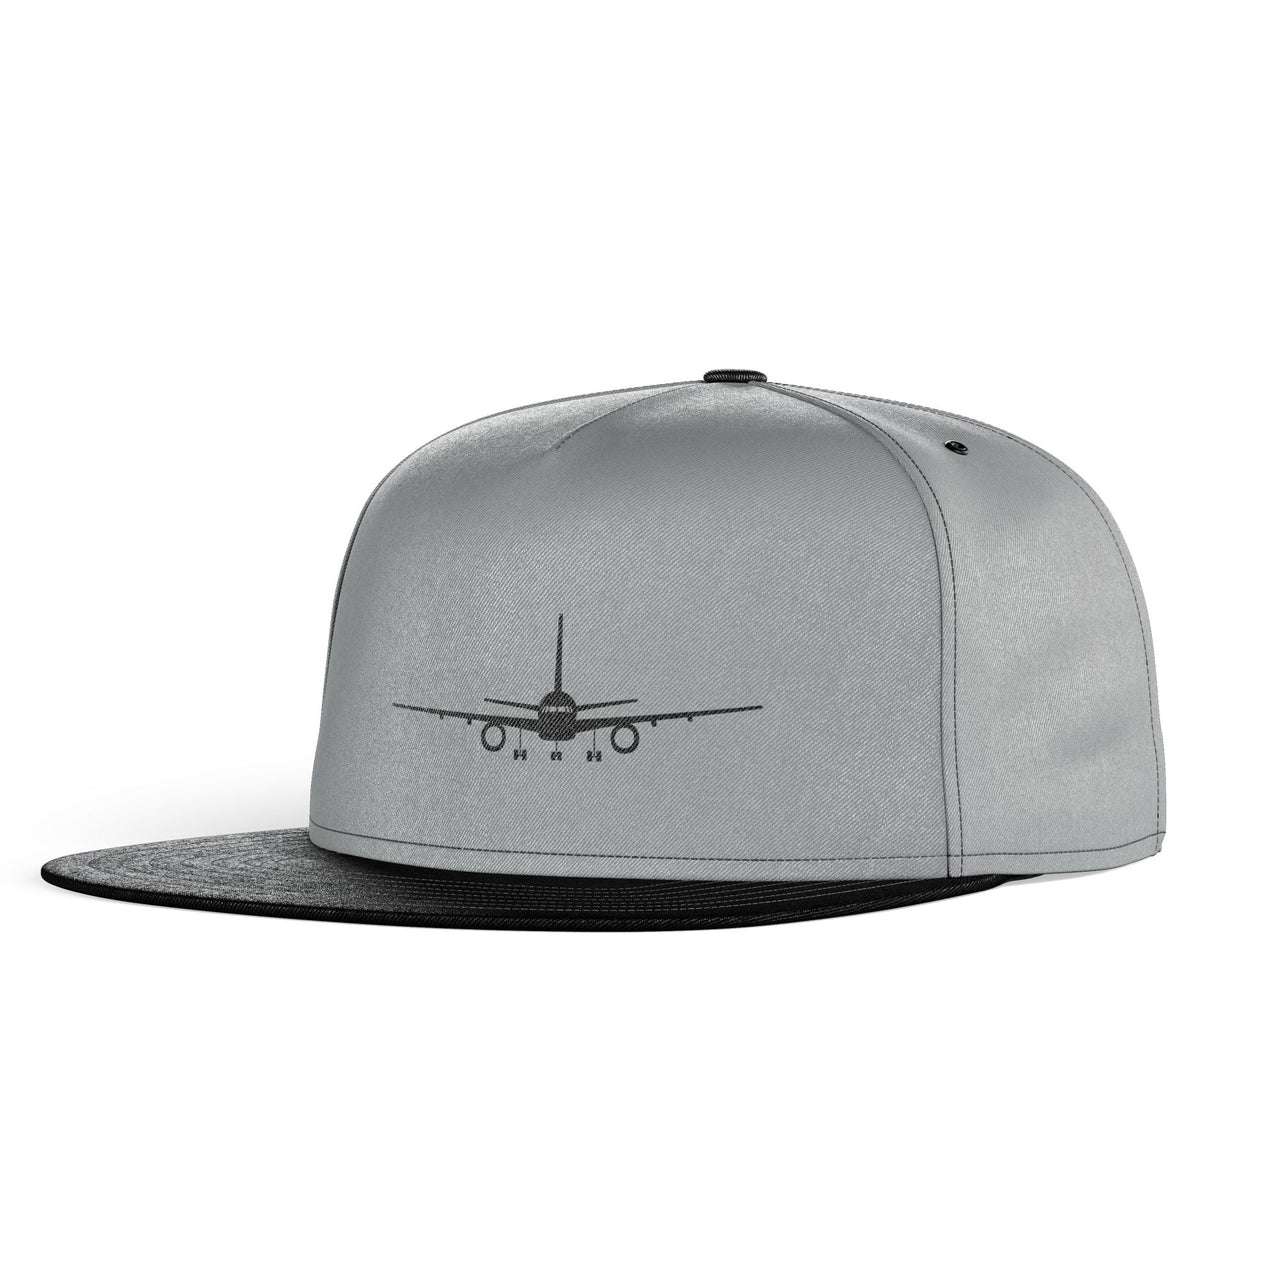 Boeing 757 Silhouette Designed Snapback Caps & Hats